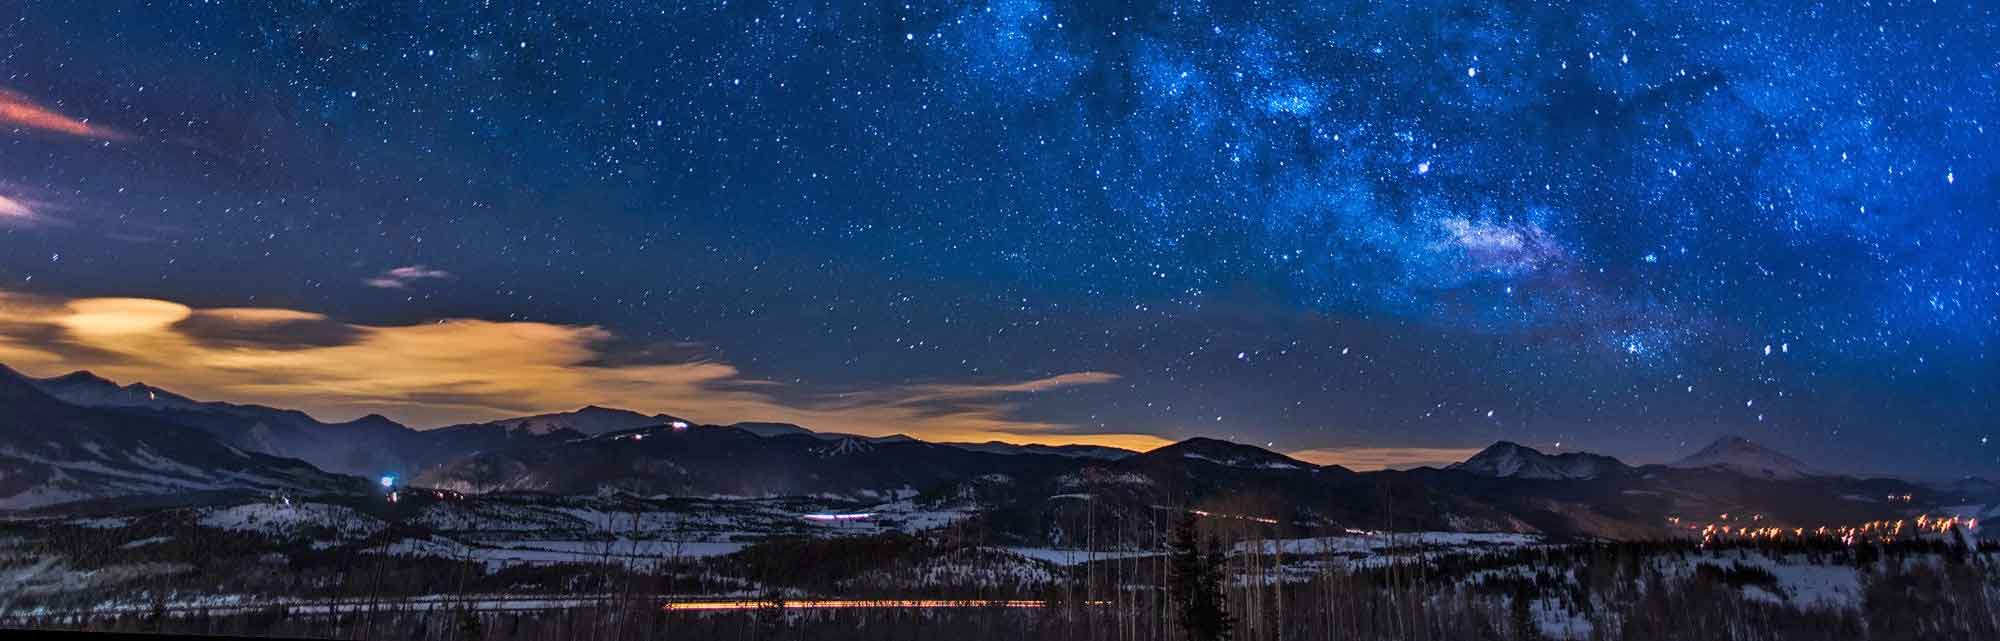 Colorado winter sky banner photo